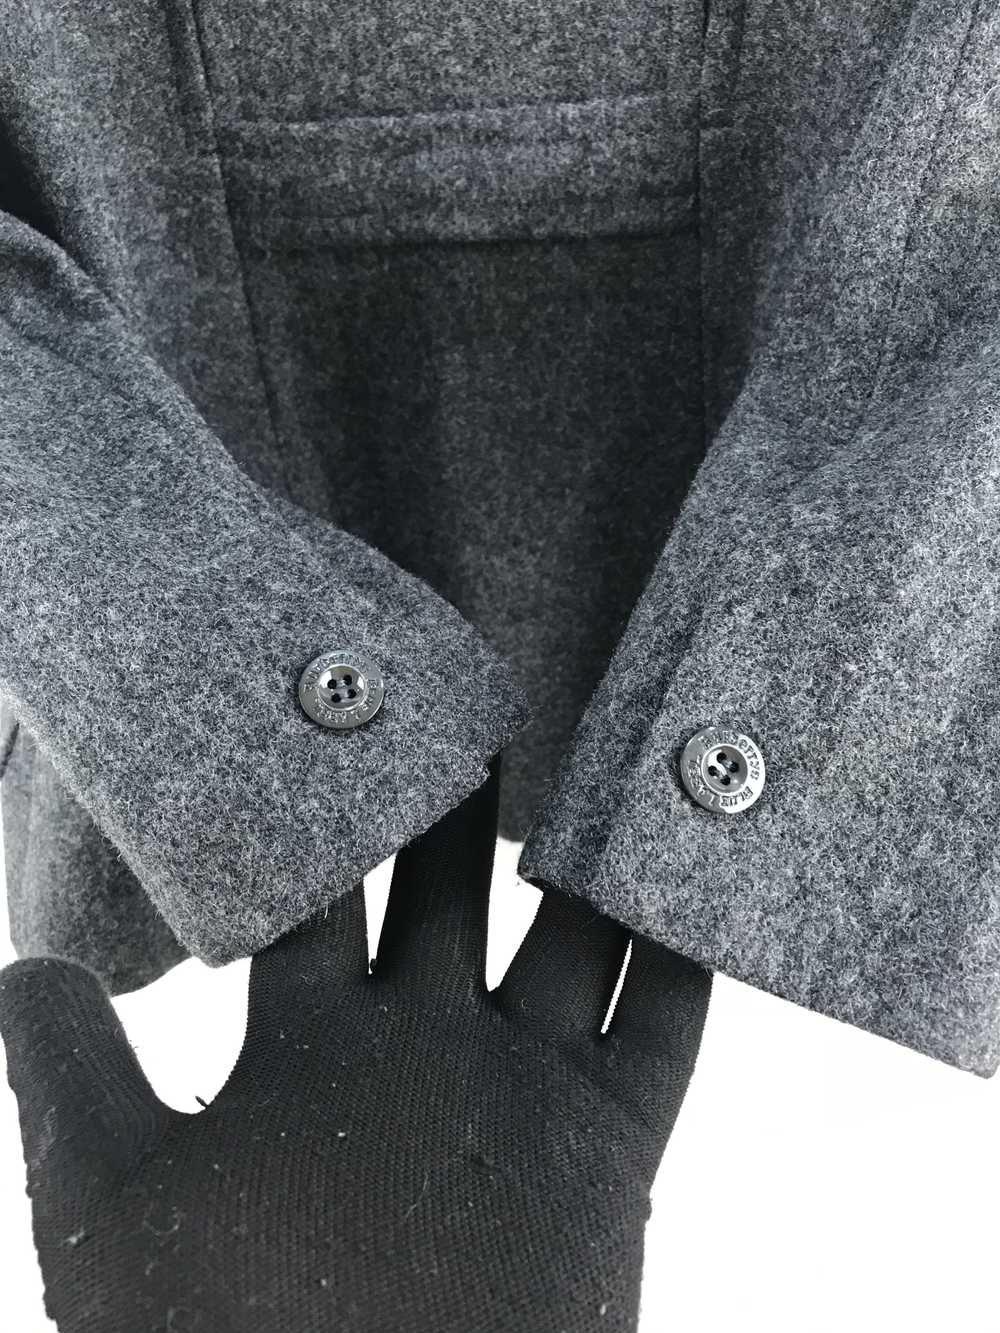 Burberry Blue Label Wool Jacket - image 8